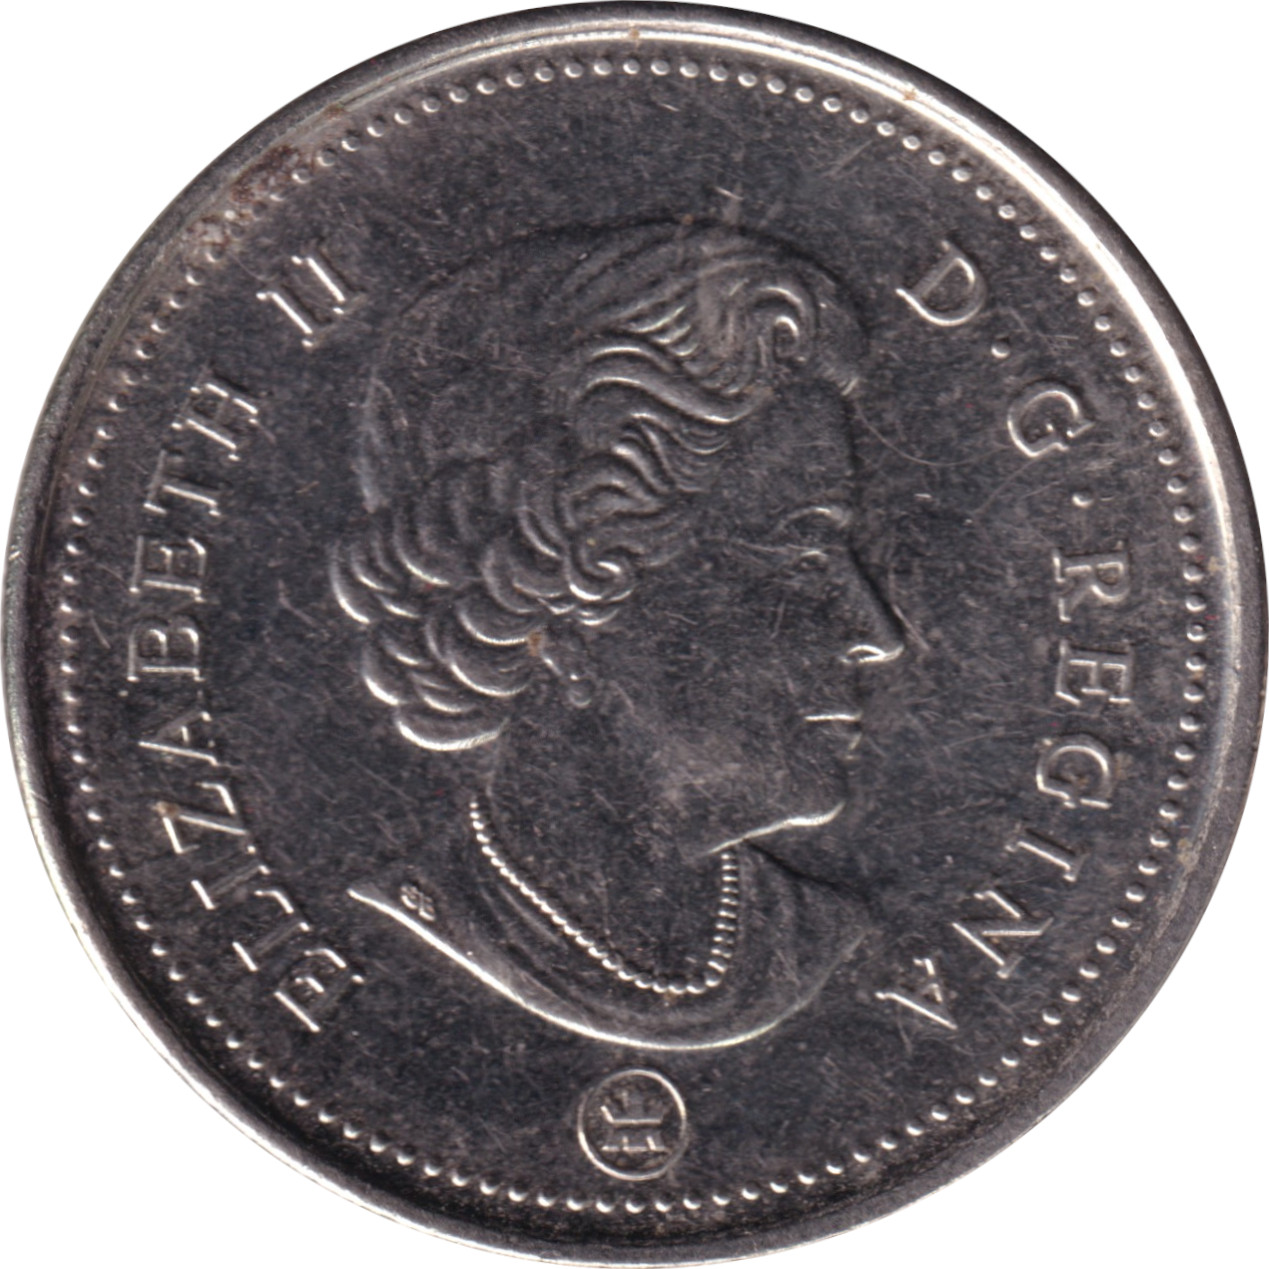 50 cents - Confédération - 150 years